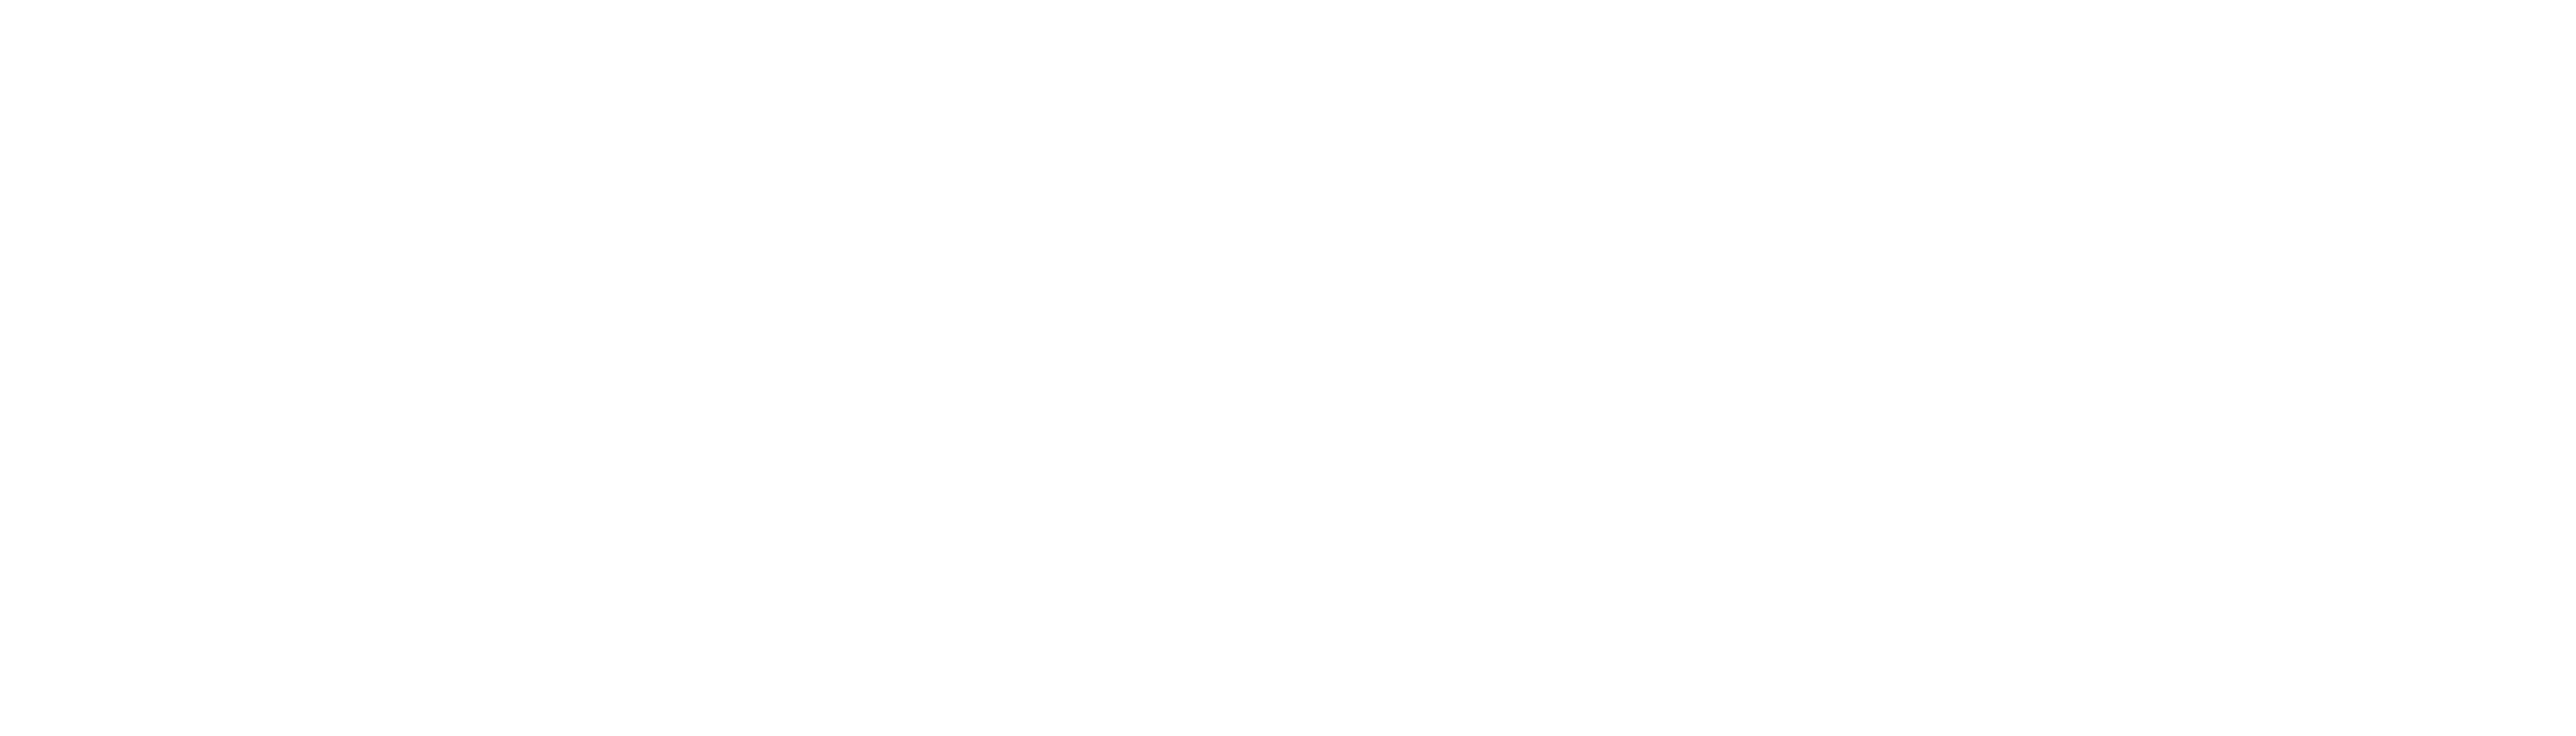 Marketing & Business News Magazine - International Brand Equity